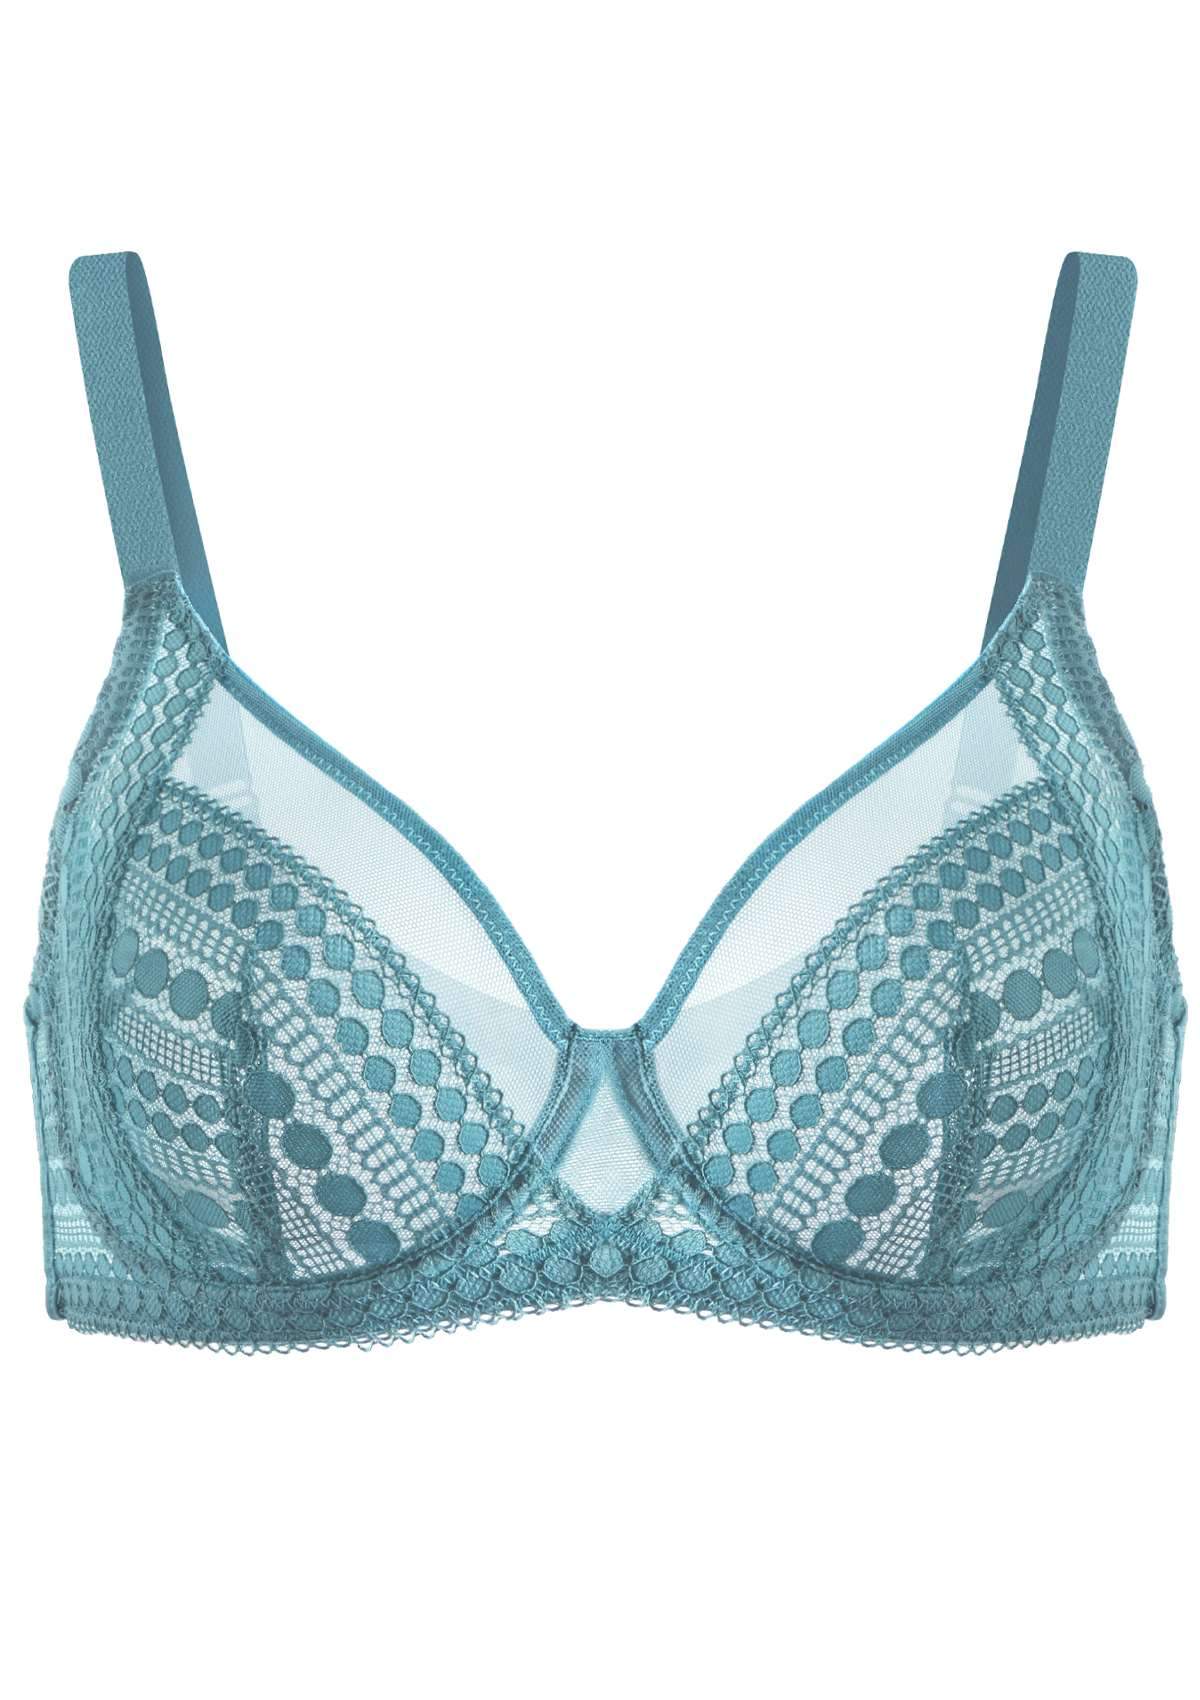 HSIA Heroine Matching Bra And Underwear Set: Bra For Big Boobs - Brittany Blue / 40 / DDD/F